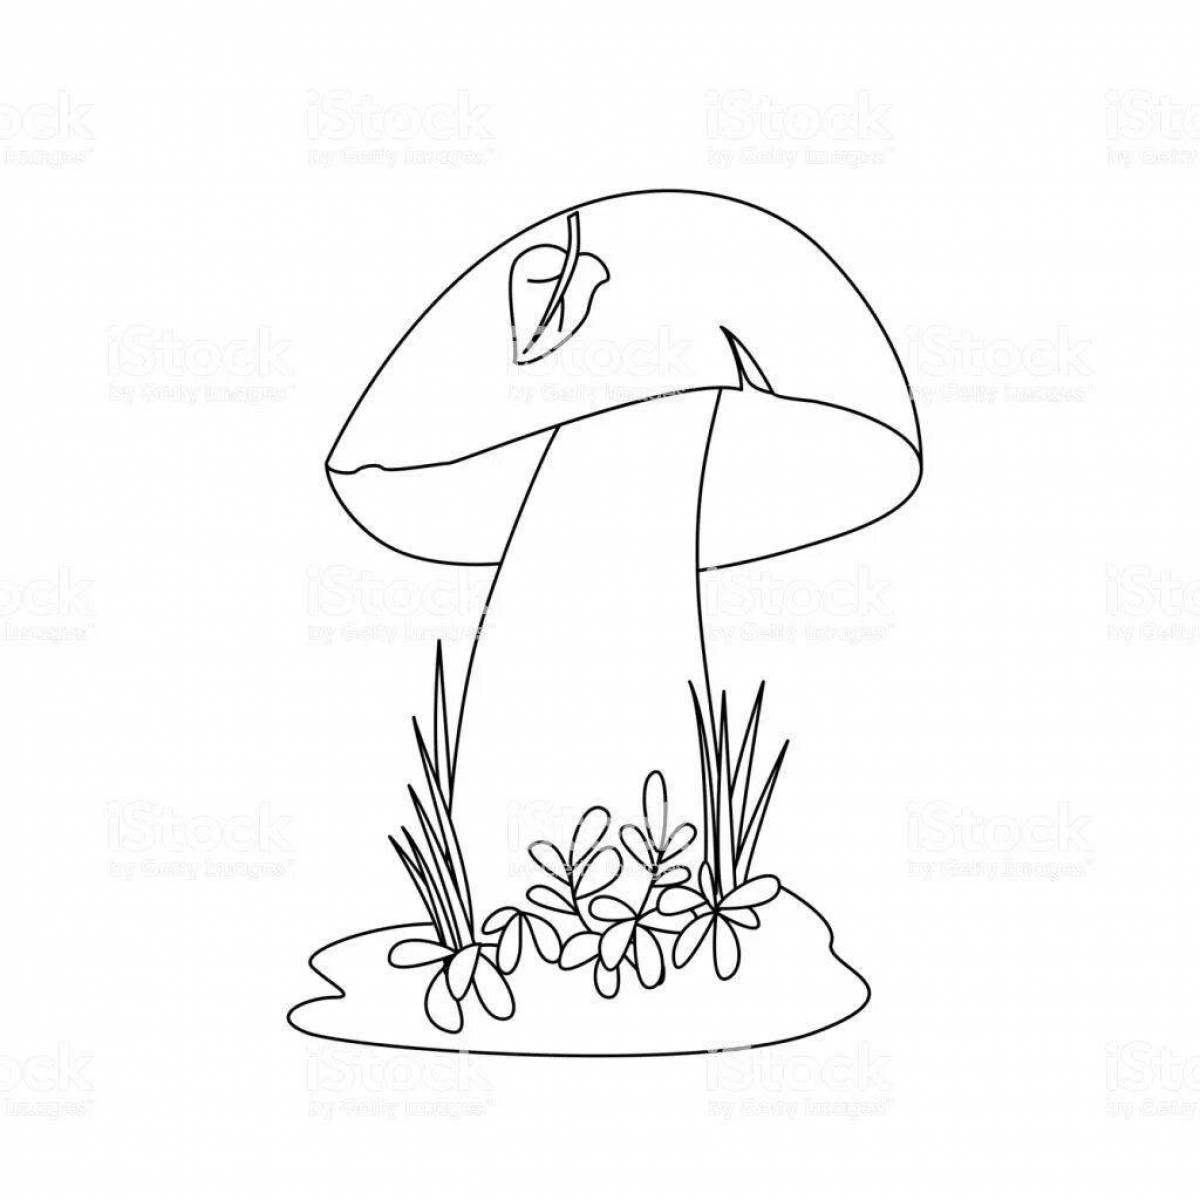 Delightful coloring fairy tale under the mushroom